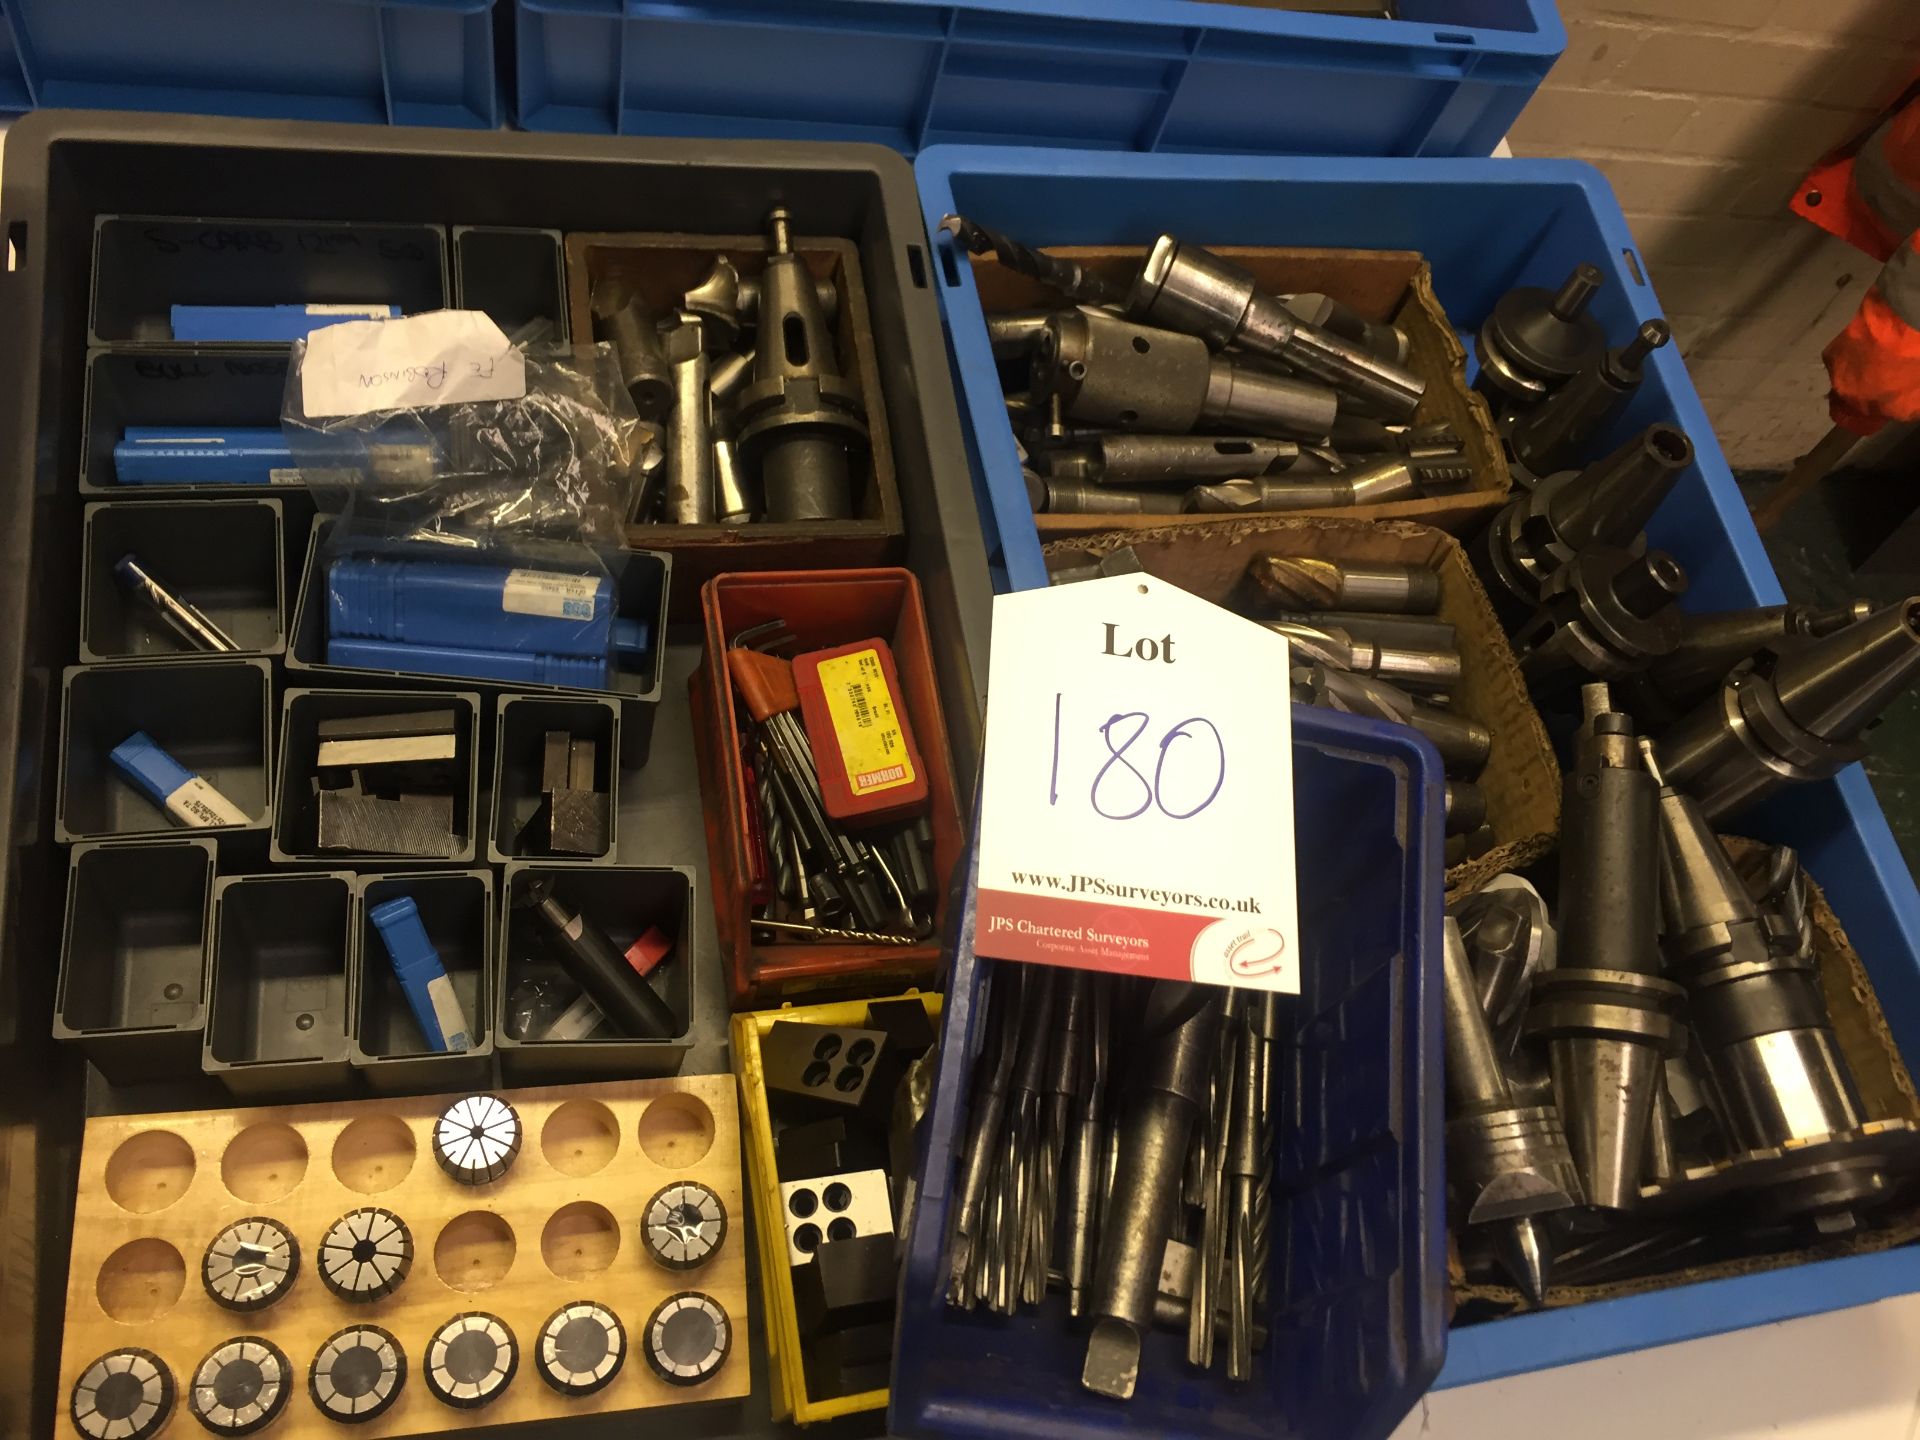 Various cutting tools, arbors, collets, etc. in 3 crates